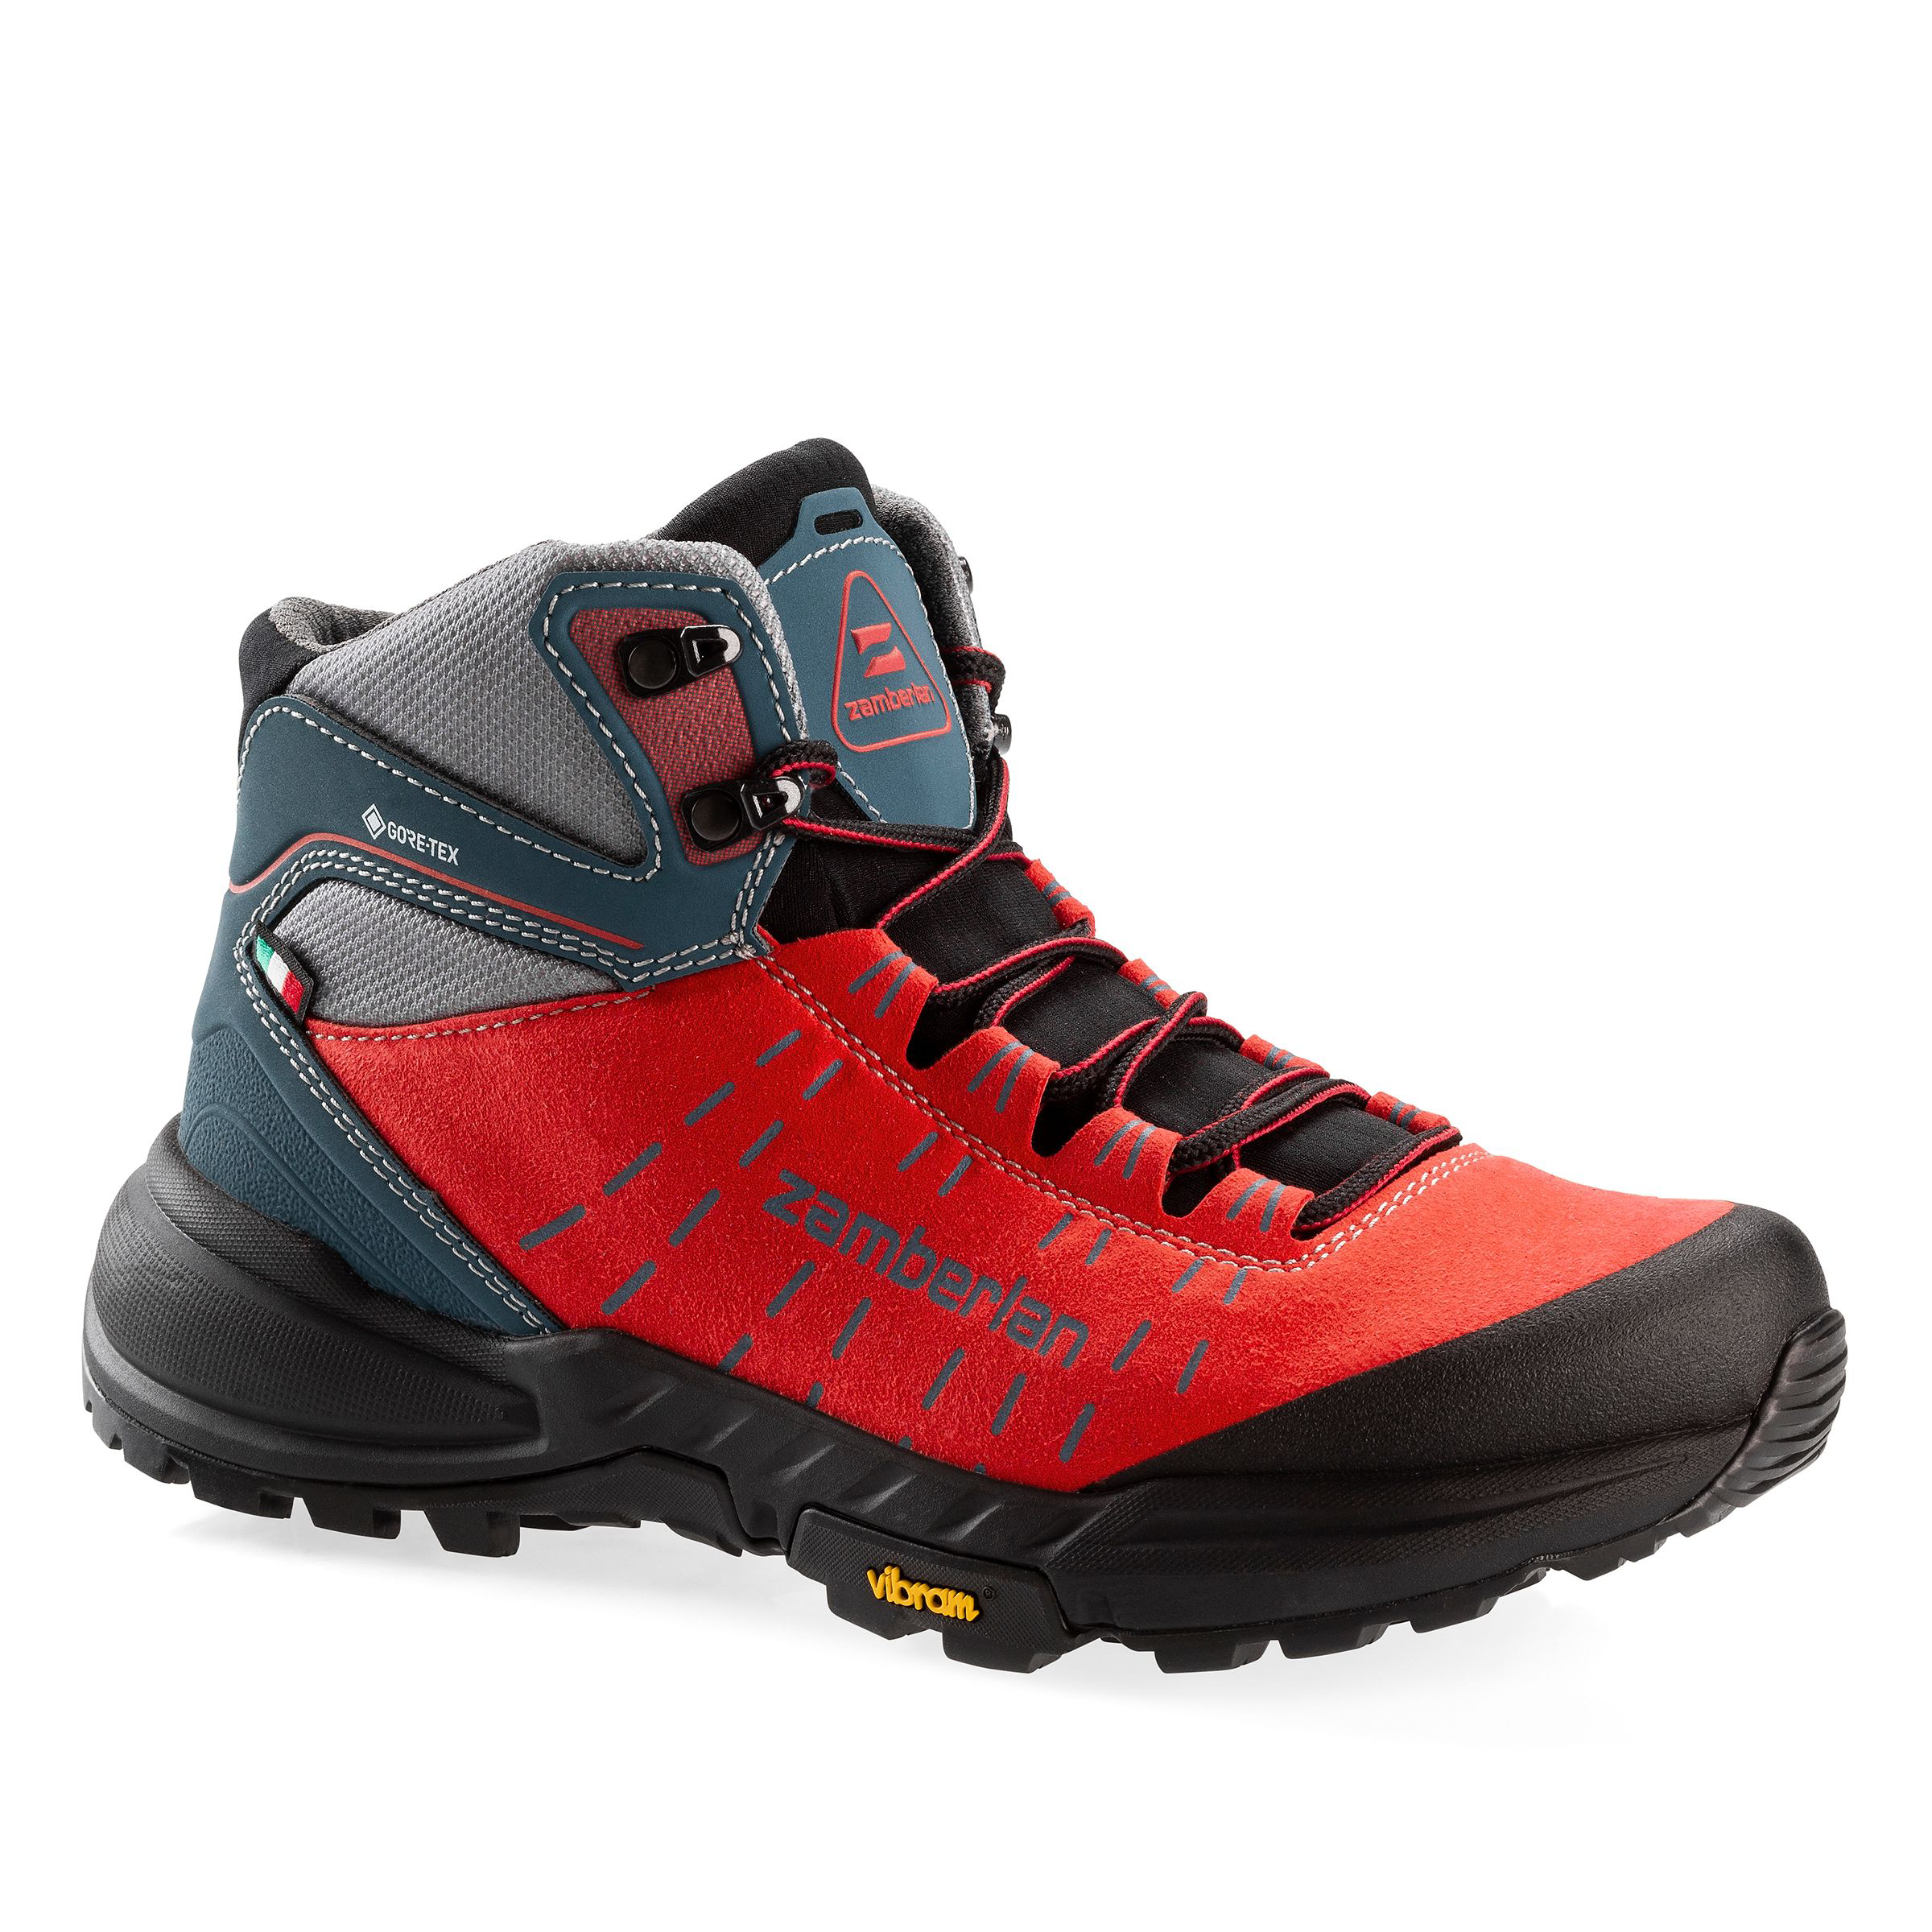 Zamberlan 334 Circe GTX Waterproof Hiking Boots for Ladies - Red - 11M